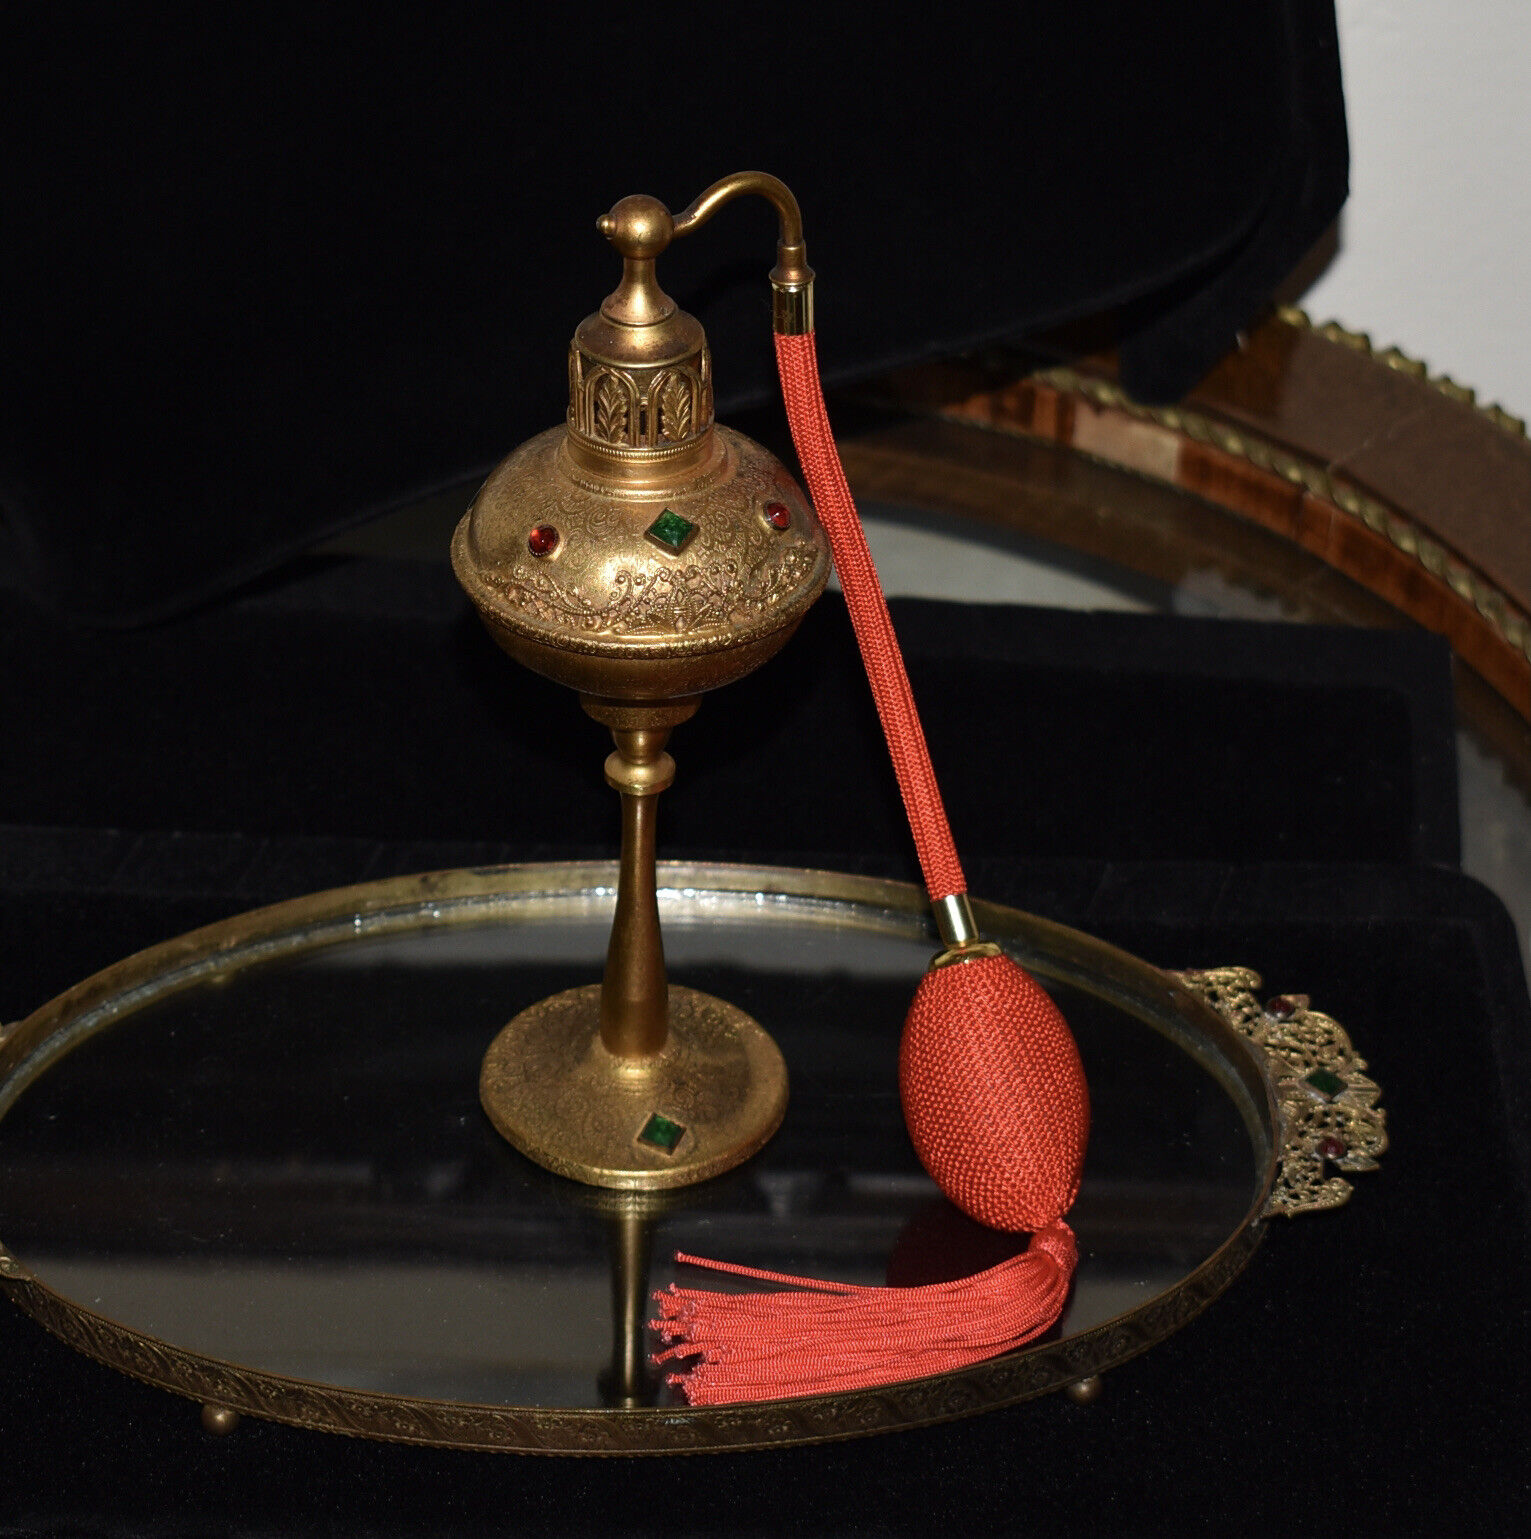 BEAUTIFUL Antique BRASS Ormolu JEWELED PERFUME BOTTLE & Matching VANITY TRAY SET